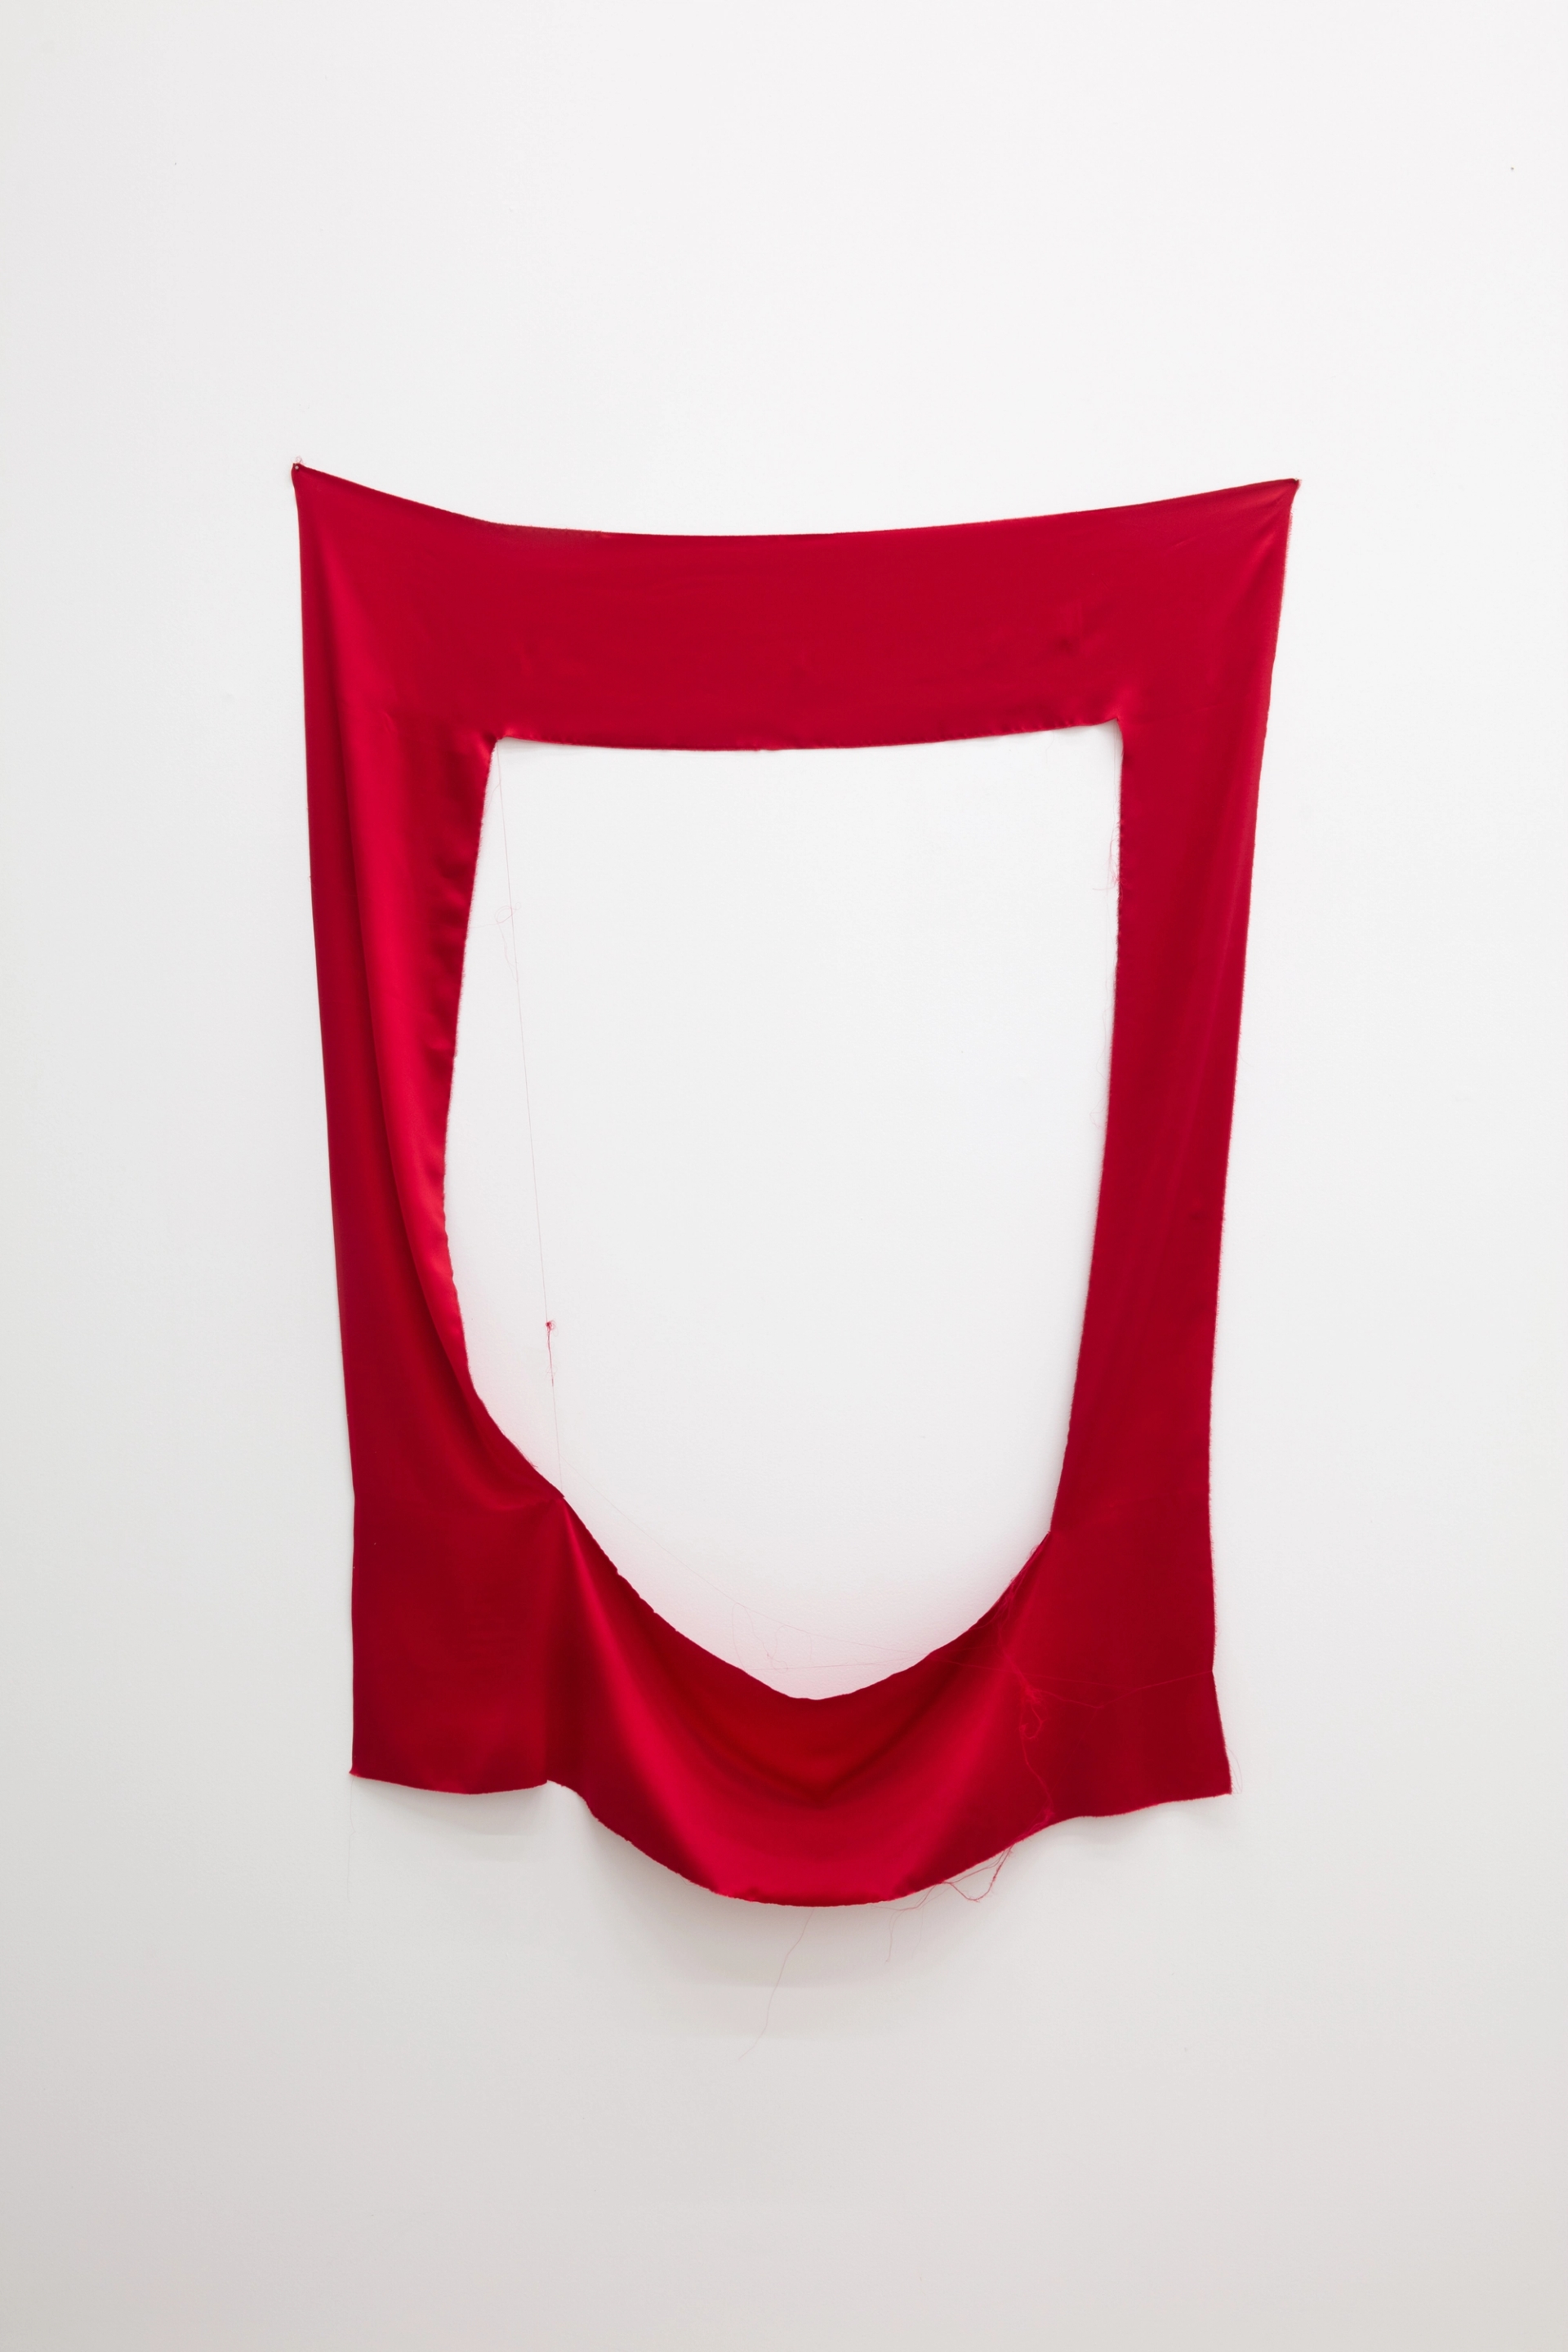 Anna-Sophie Berger, “Crimson,” 2022, Inkjet on paper, frame, 90 x 120 cm